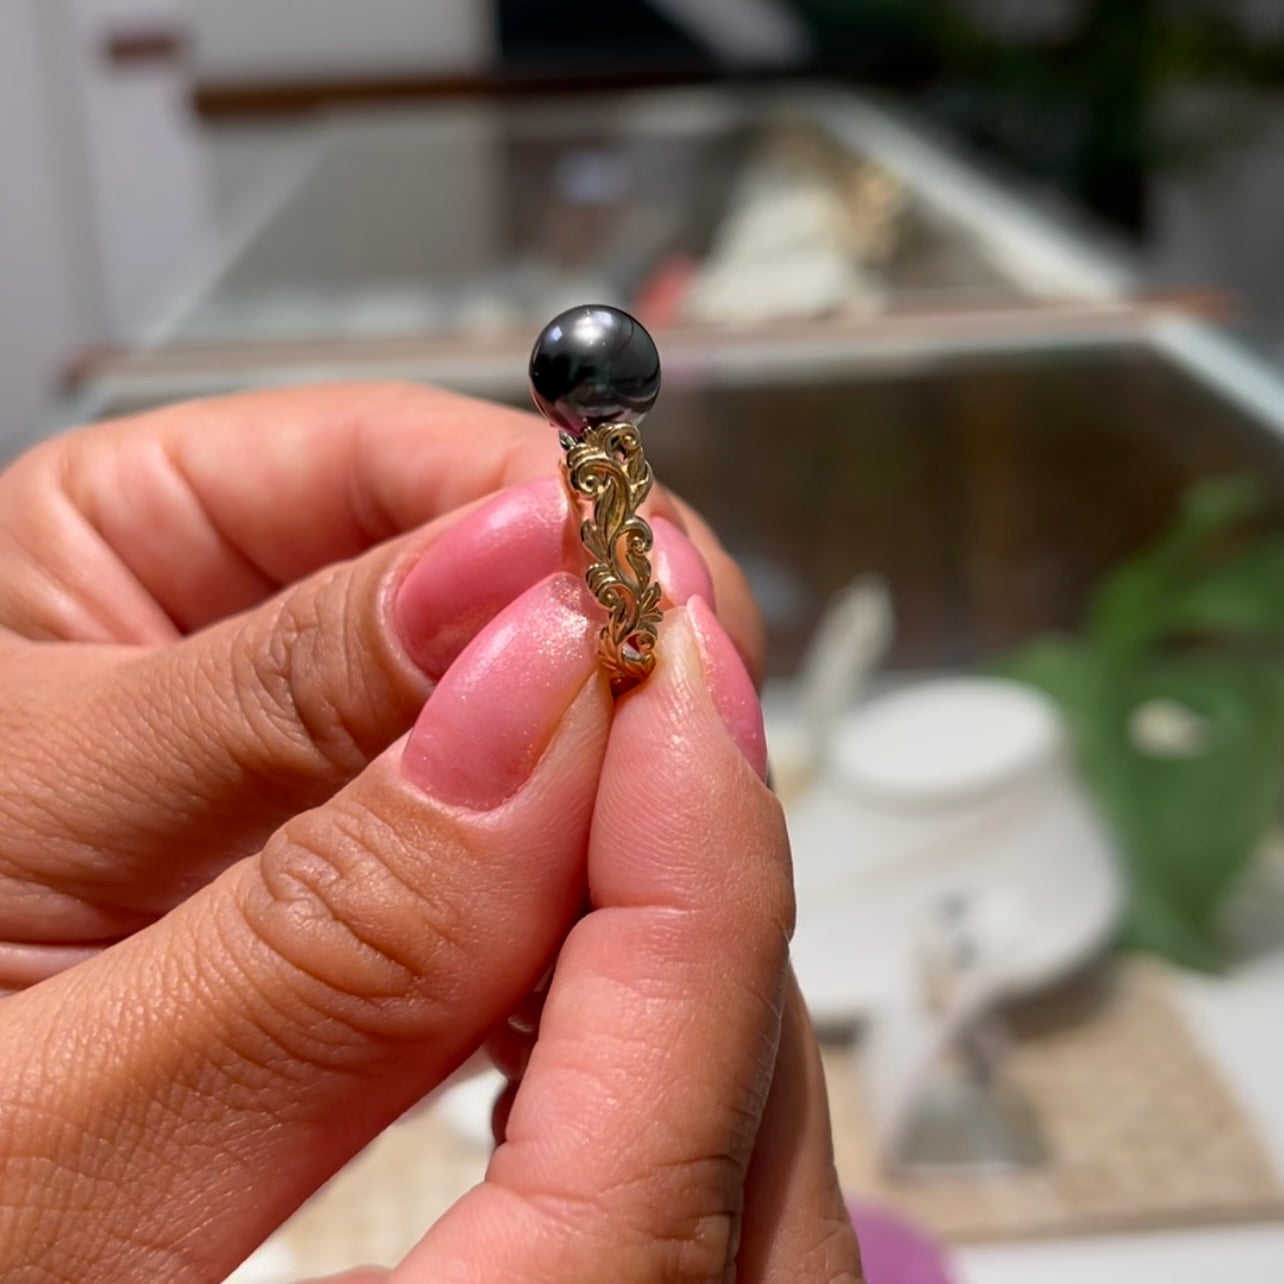 Living Heirloom Tahitian Black Pearl Ring in Gold - 8-9mm